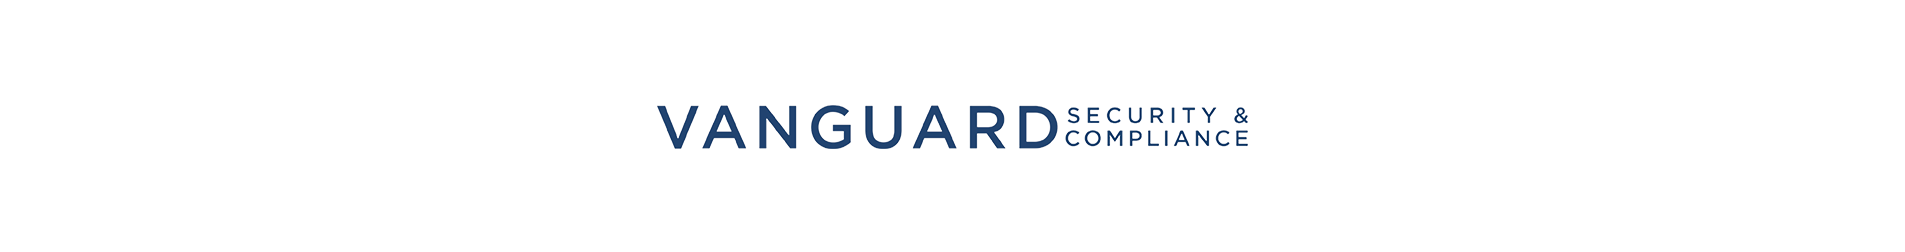 Vanguard Integrity Professionalss profilbanner